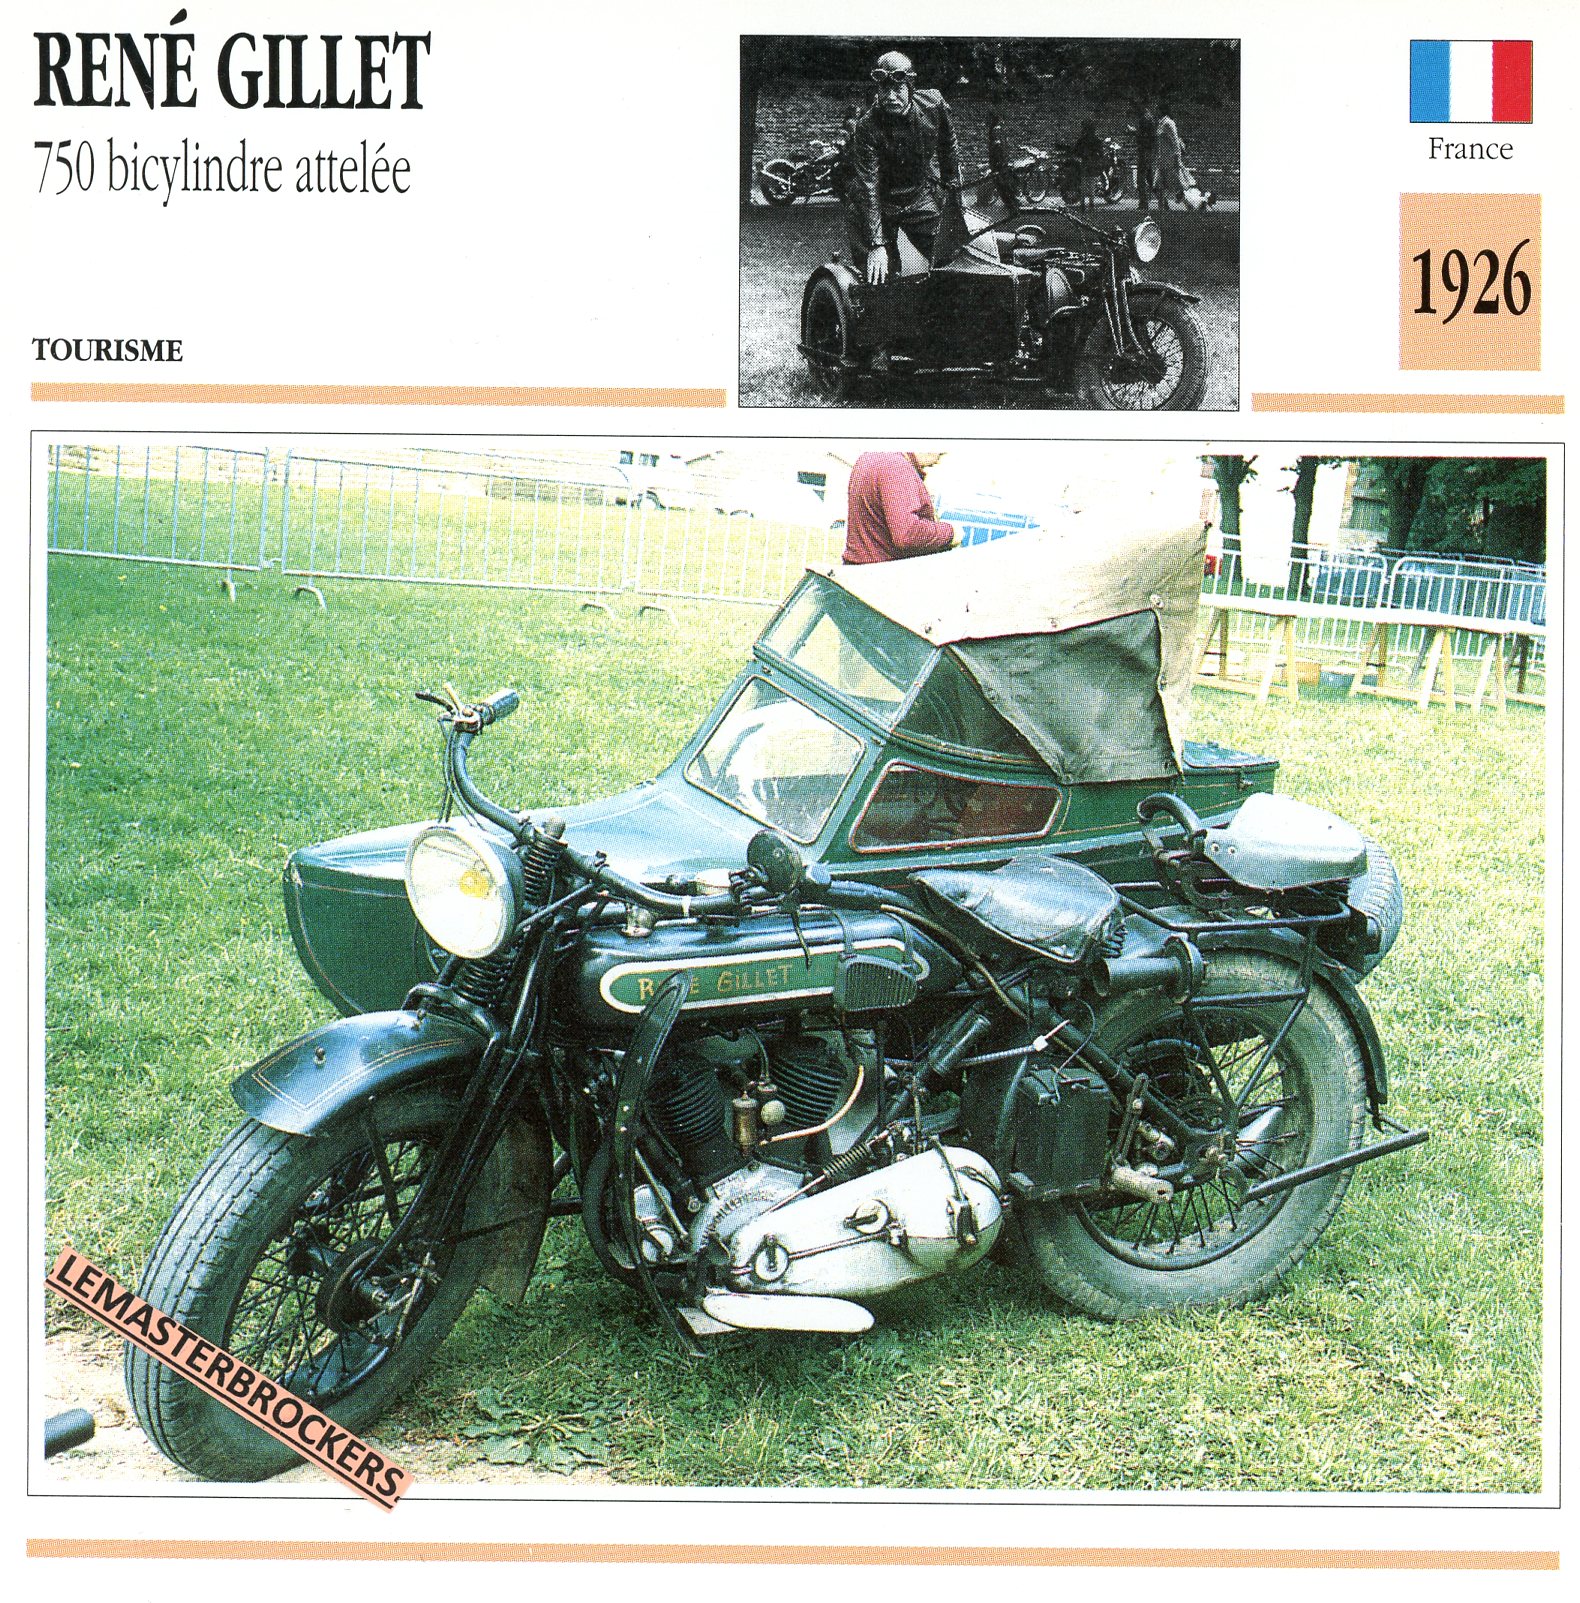 RENÉ GILLET 750 BICYLINDRE ATTELÉE 1926 - FICHE MOTO ATLAS